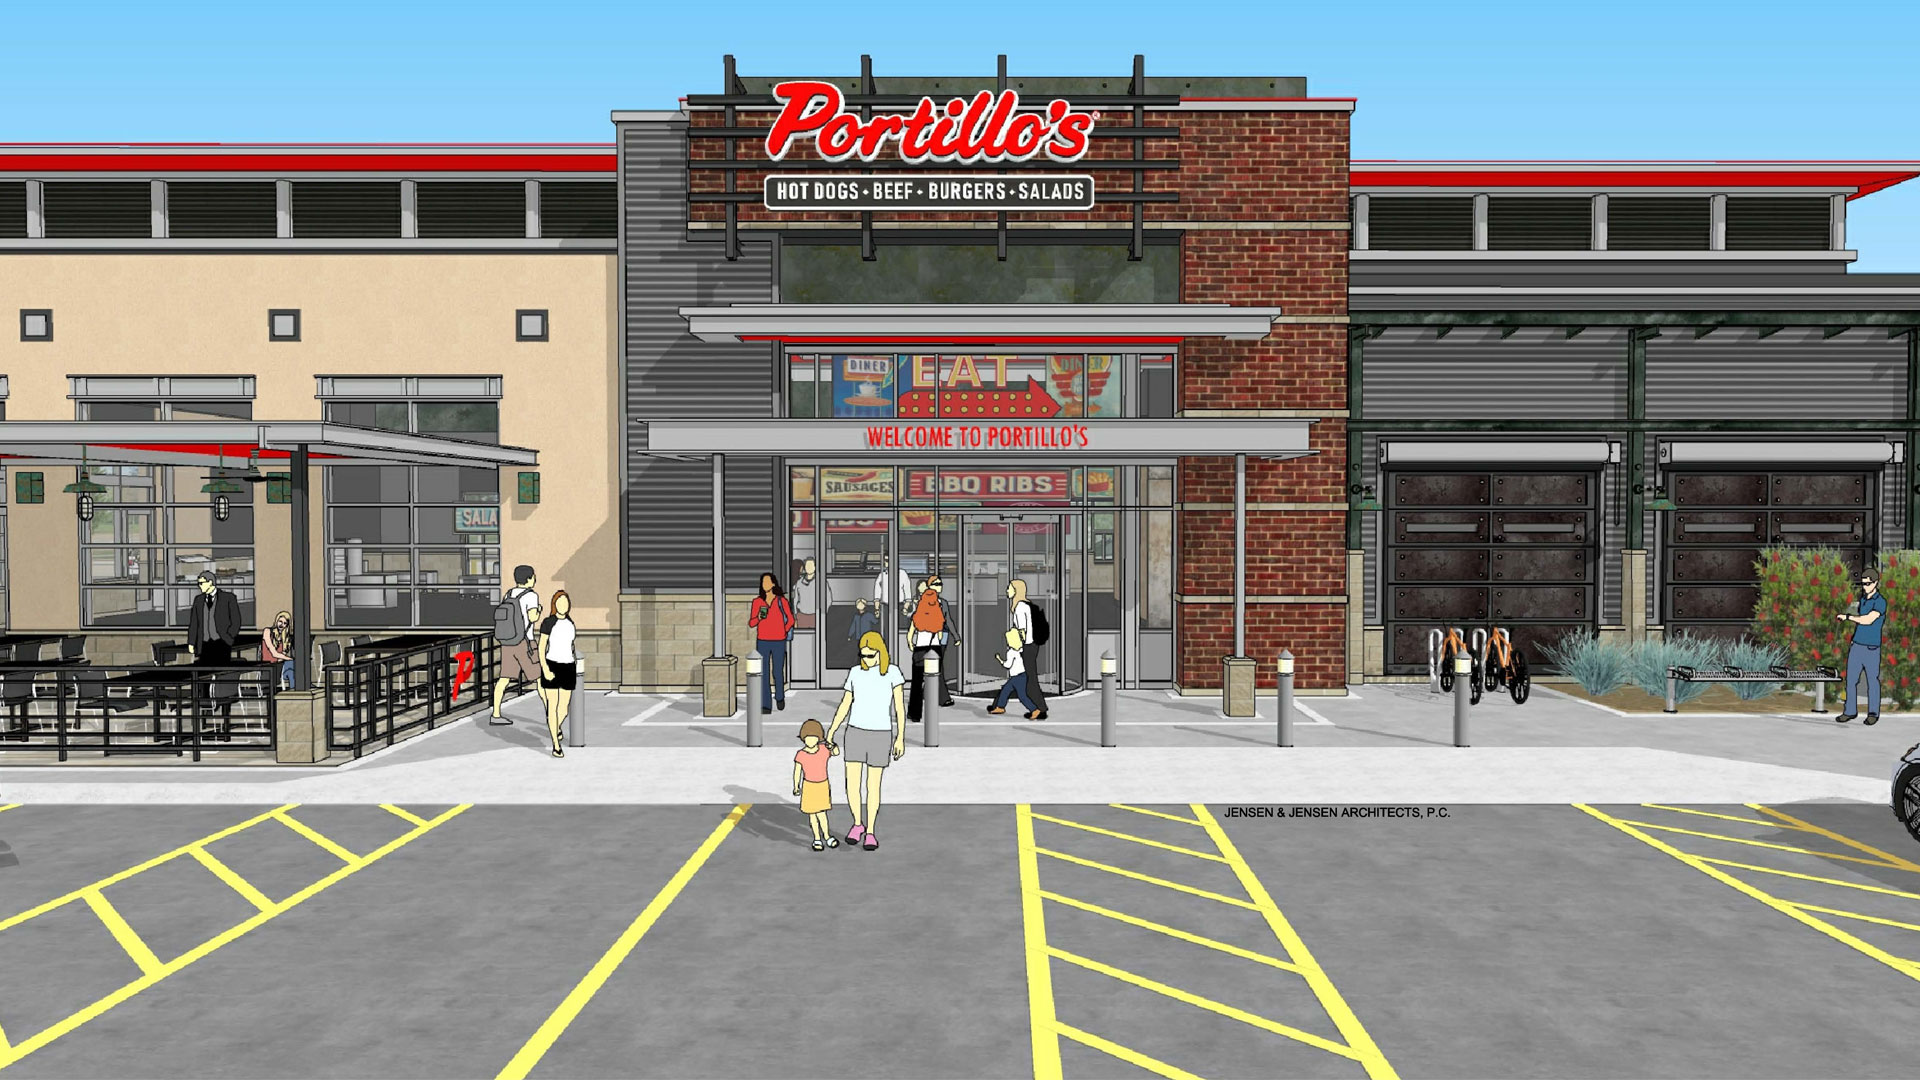 Portillo's is opening in Arlington, TX